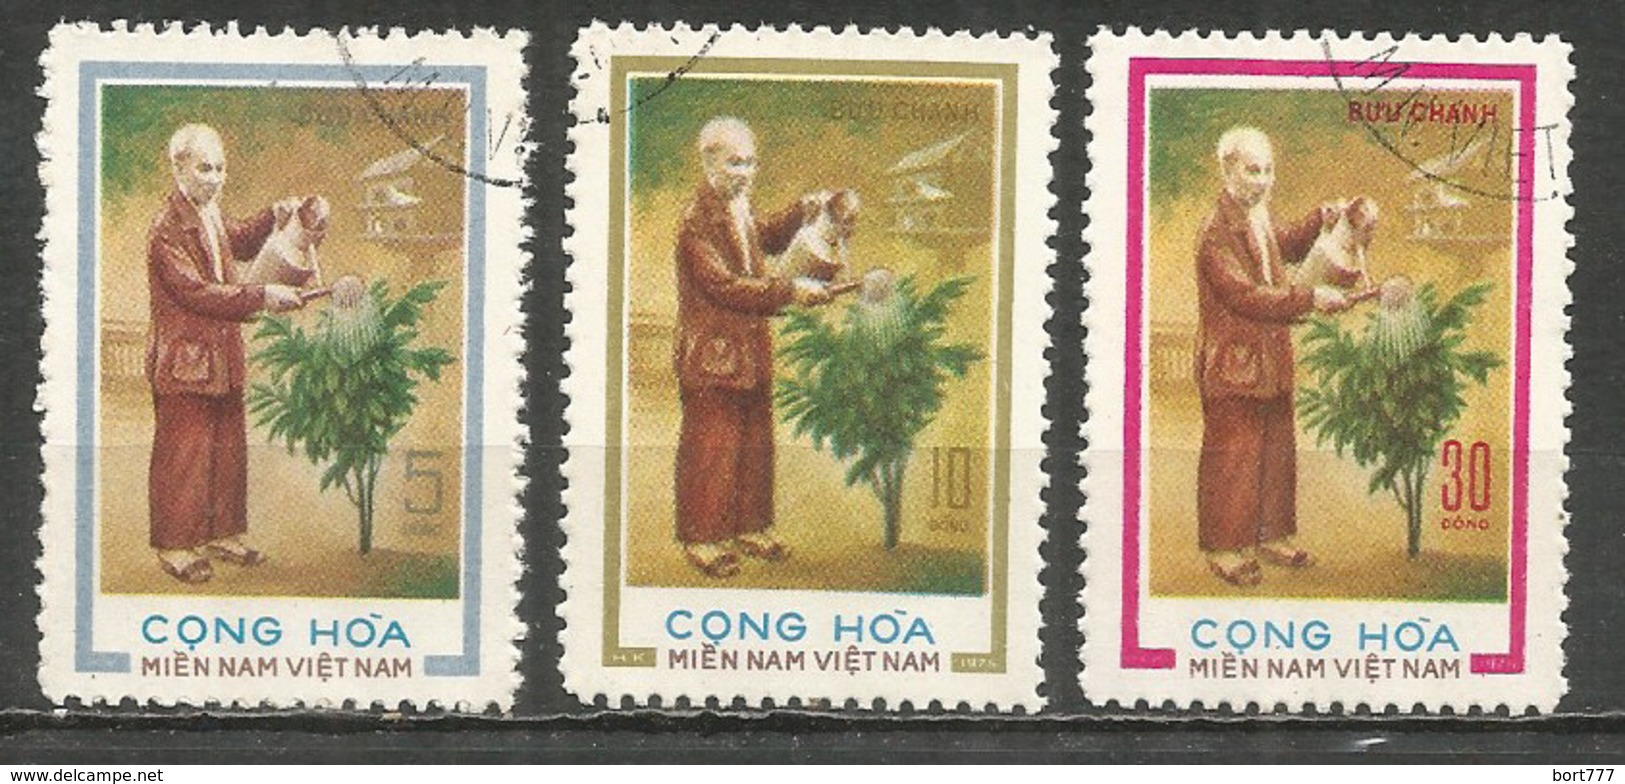 Vietnam North 1975 Year Used Stamps - Vietnam